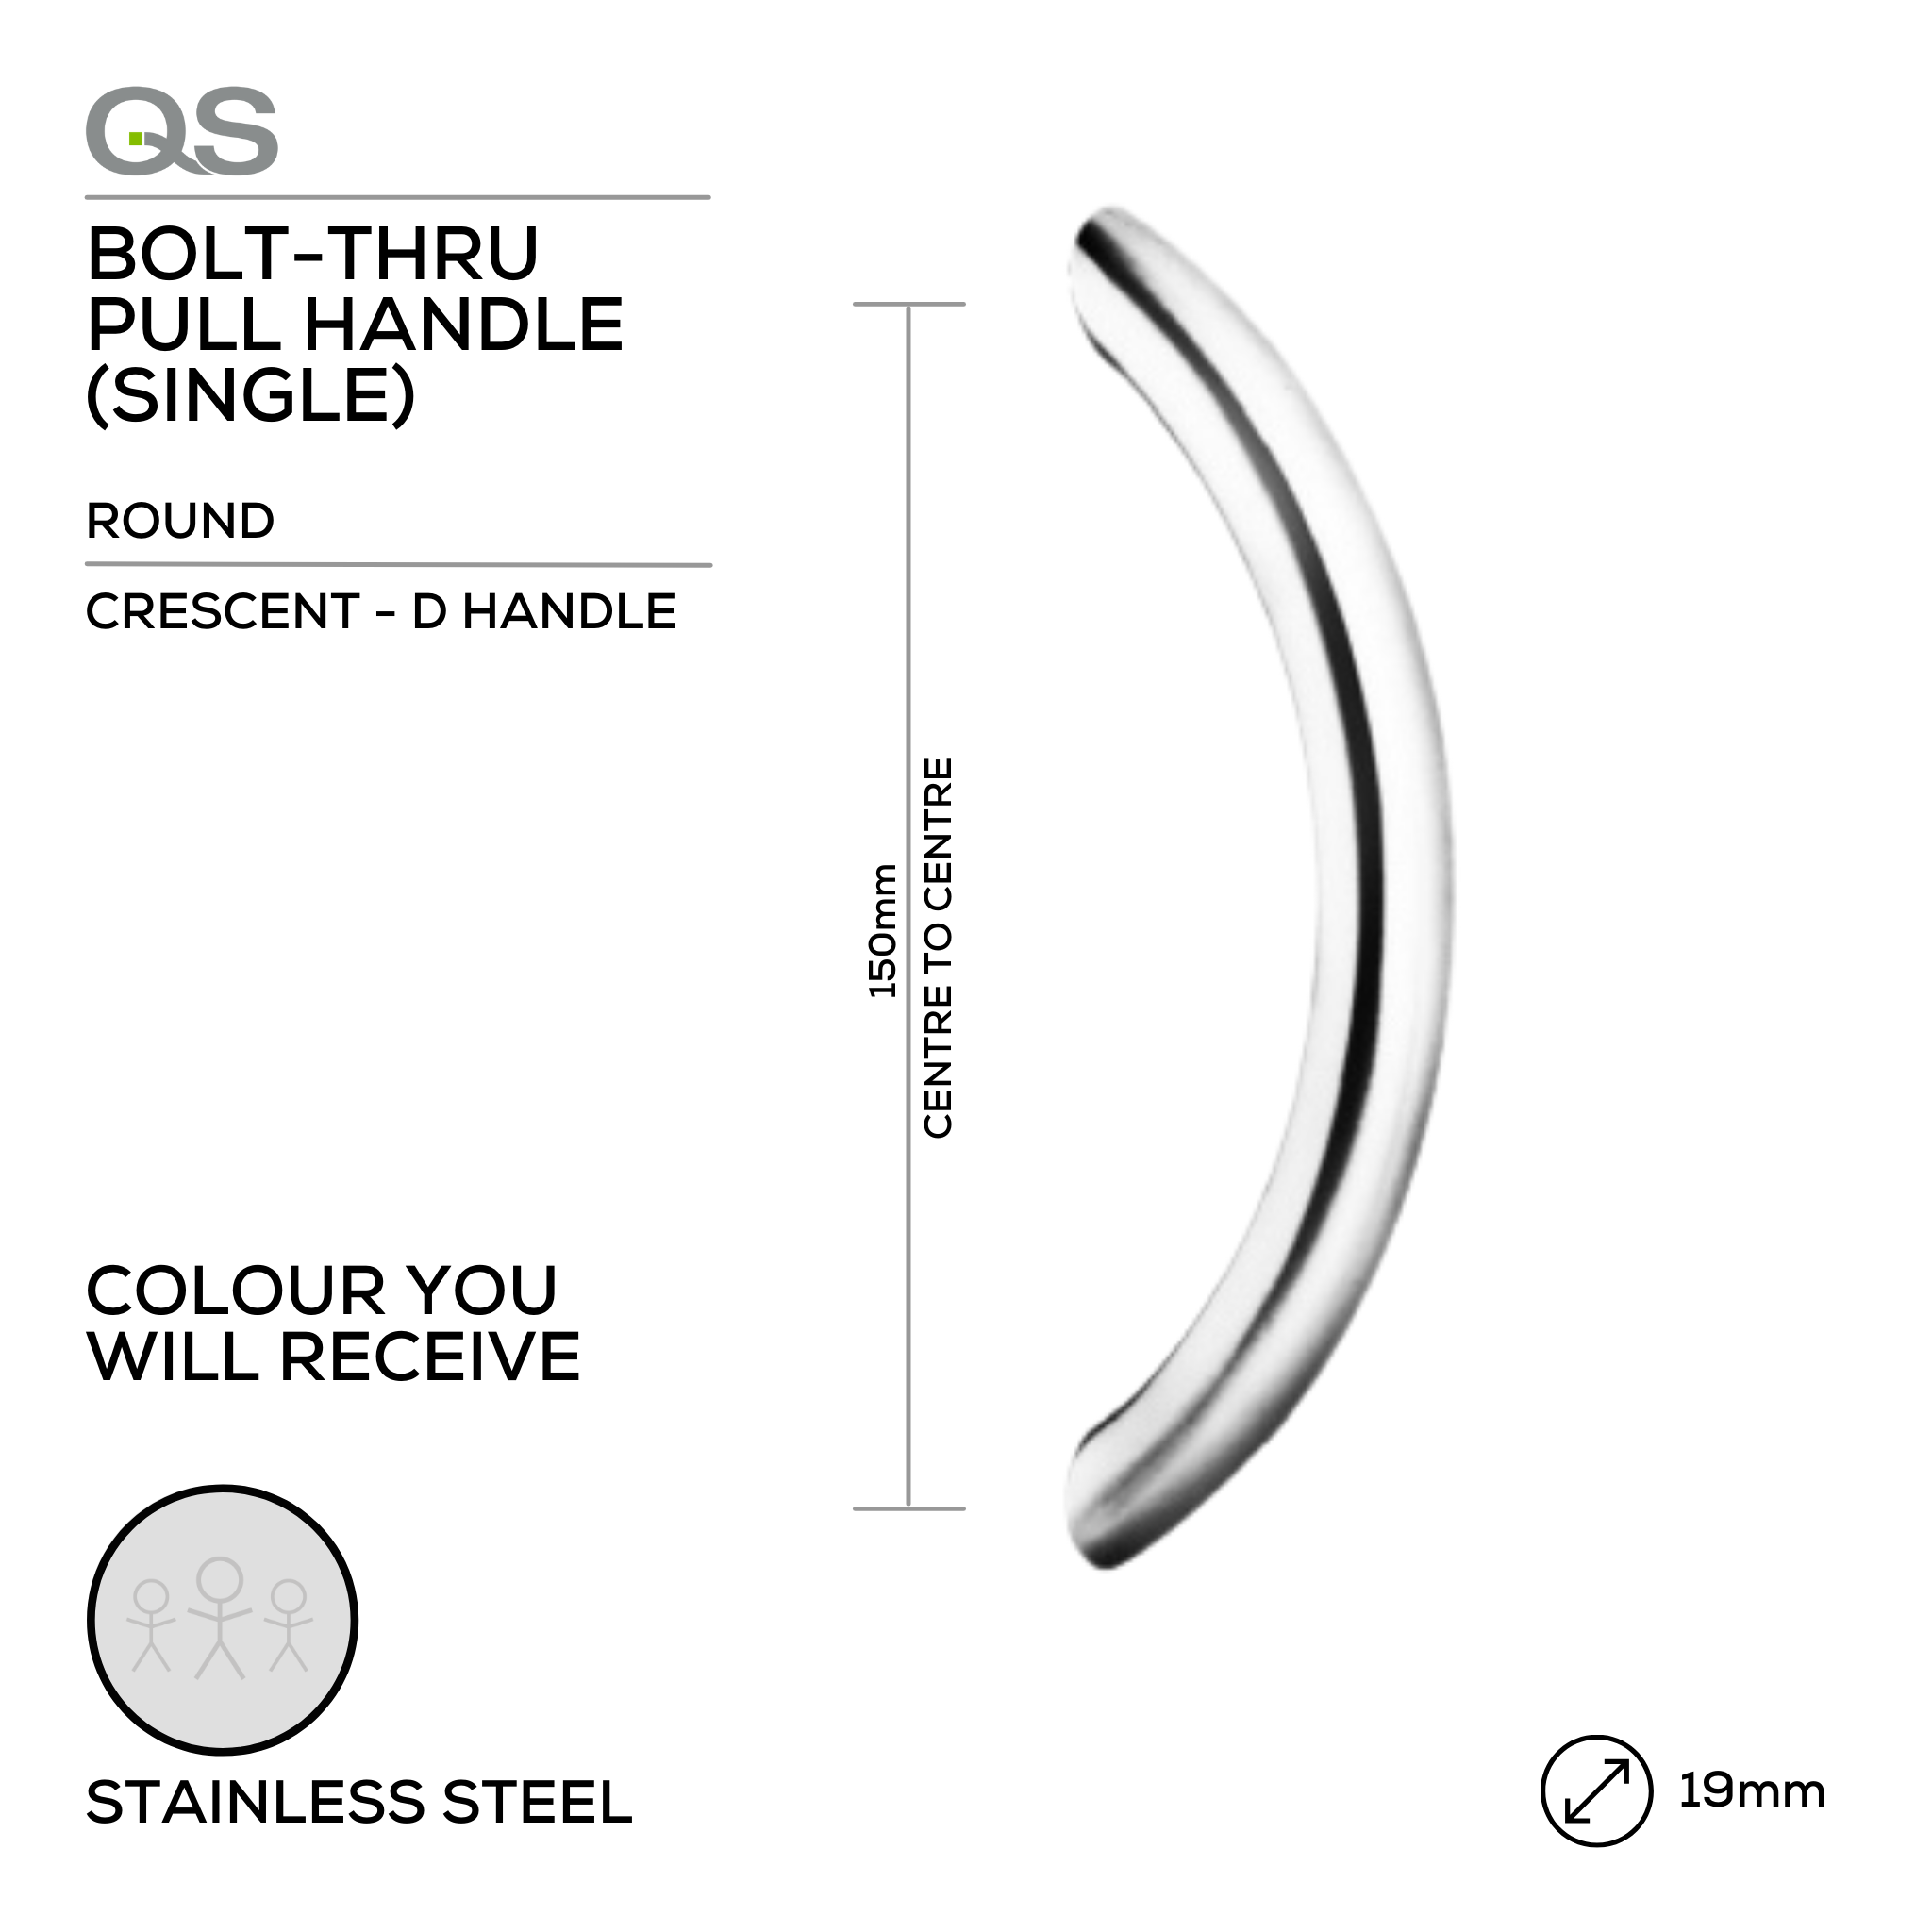 QS2205/1 Crescent D Handle, Pull Handle, Round, Crescent, D Handle, BoltThru, 19mm (Ø) x 150mm (I), Stainless Steel, QS